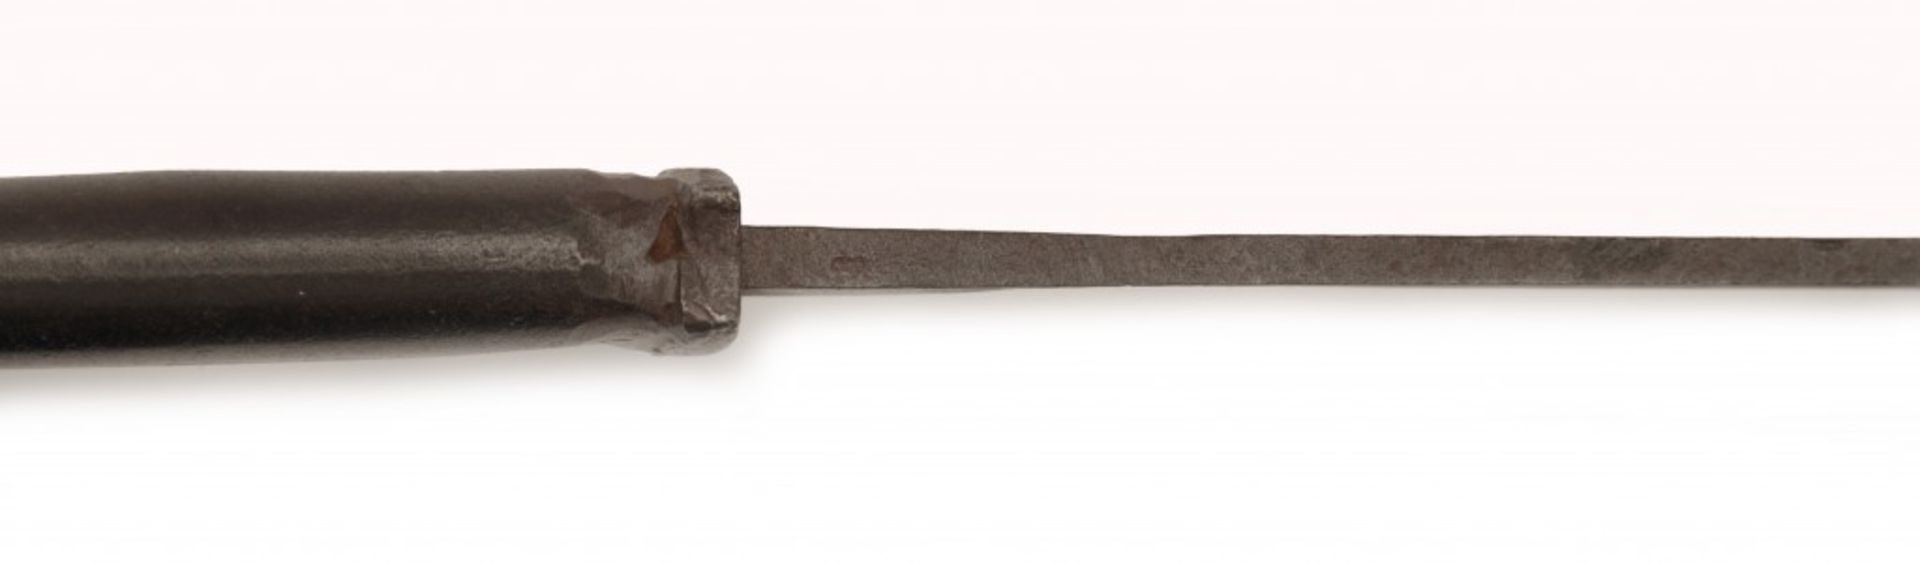 Ersatz bayonet - Image 4 of 4